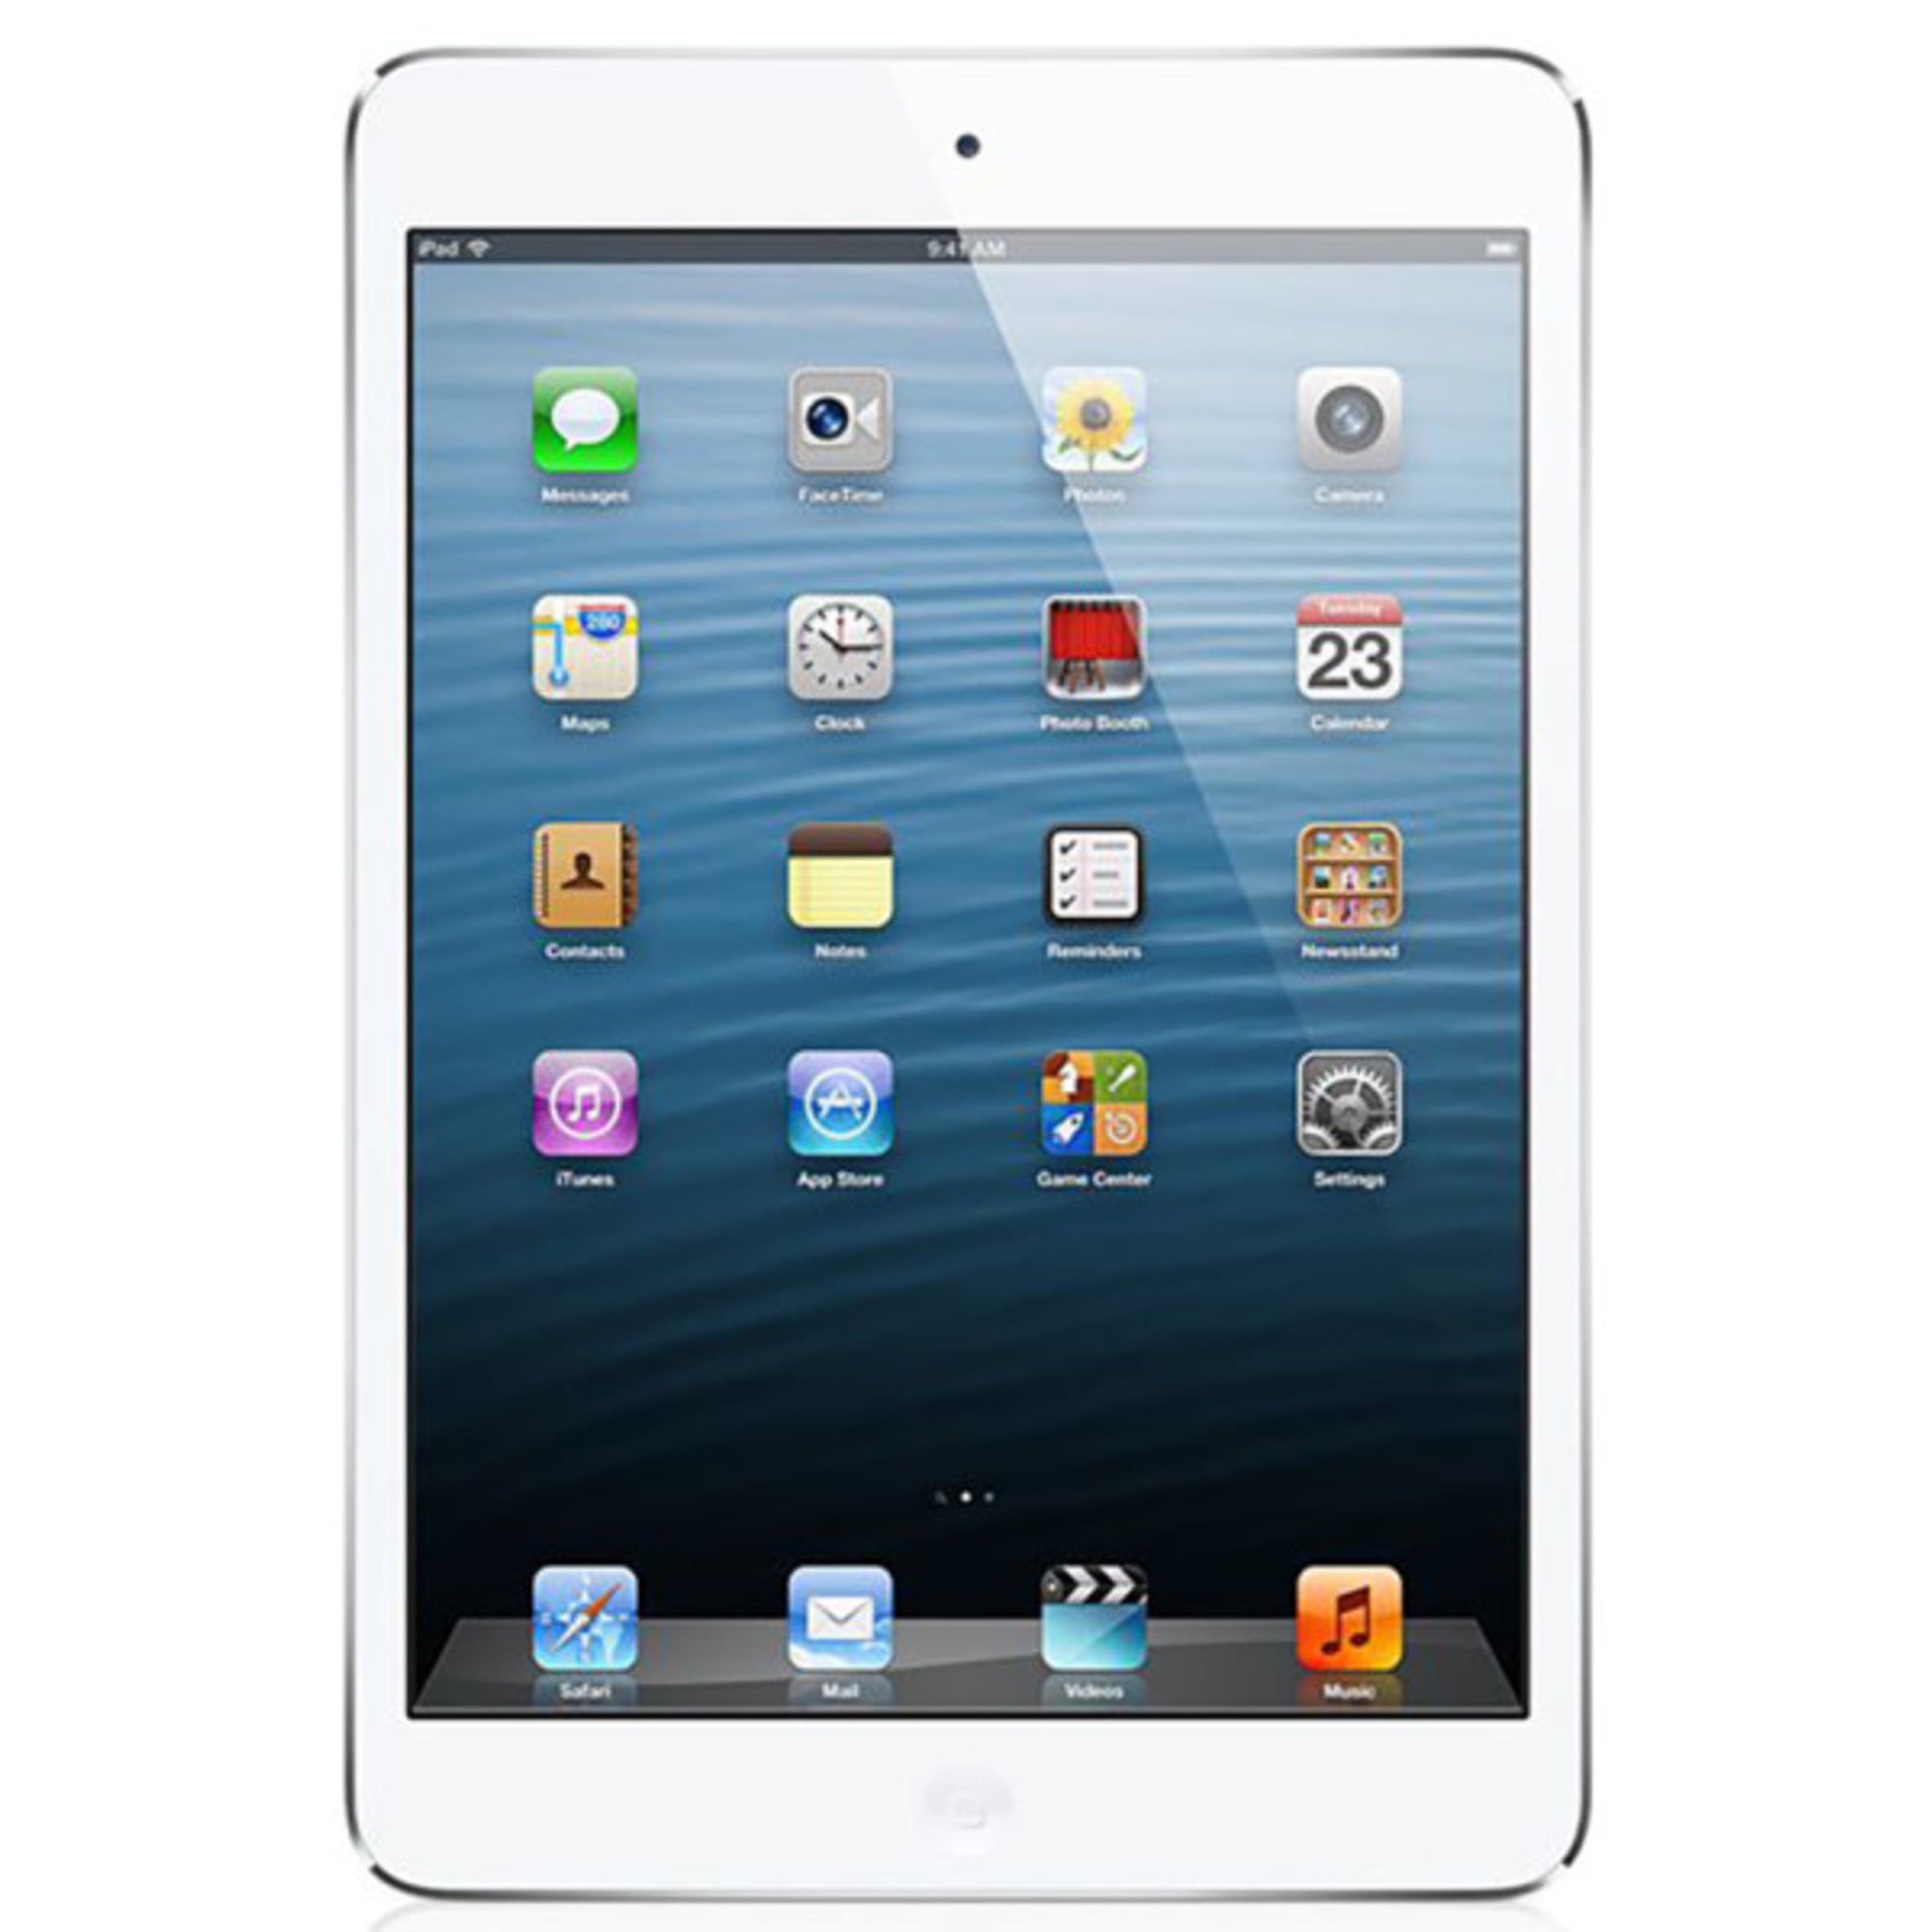 Apple iPad Mini (1st Gen) A1432 16GB Space Gray WiFi - B Condition